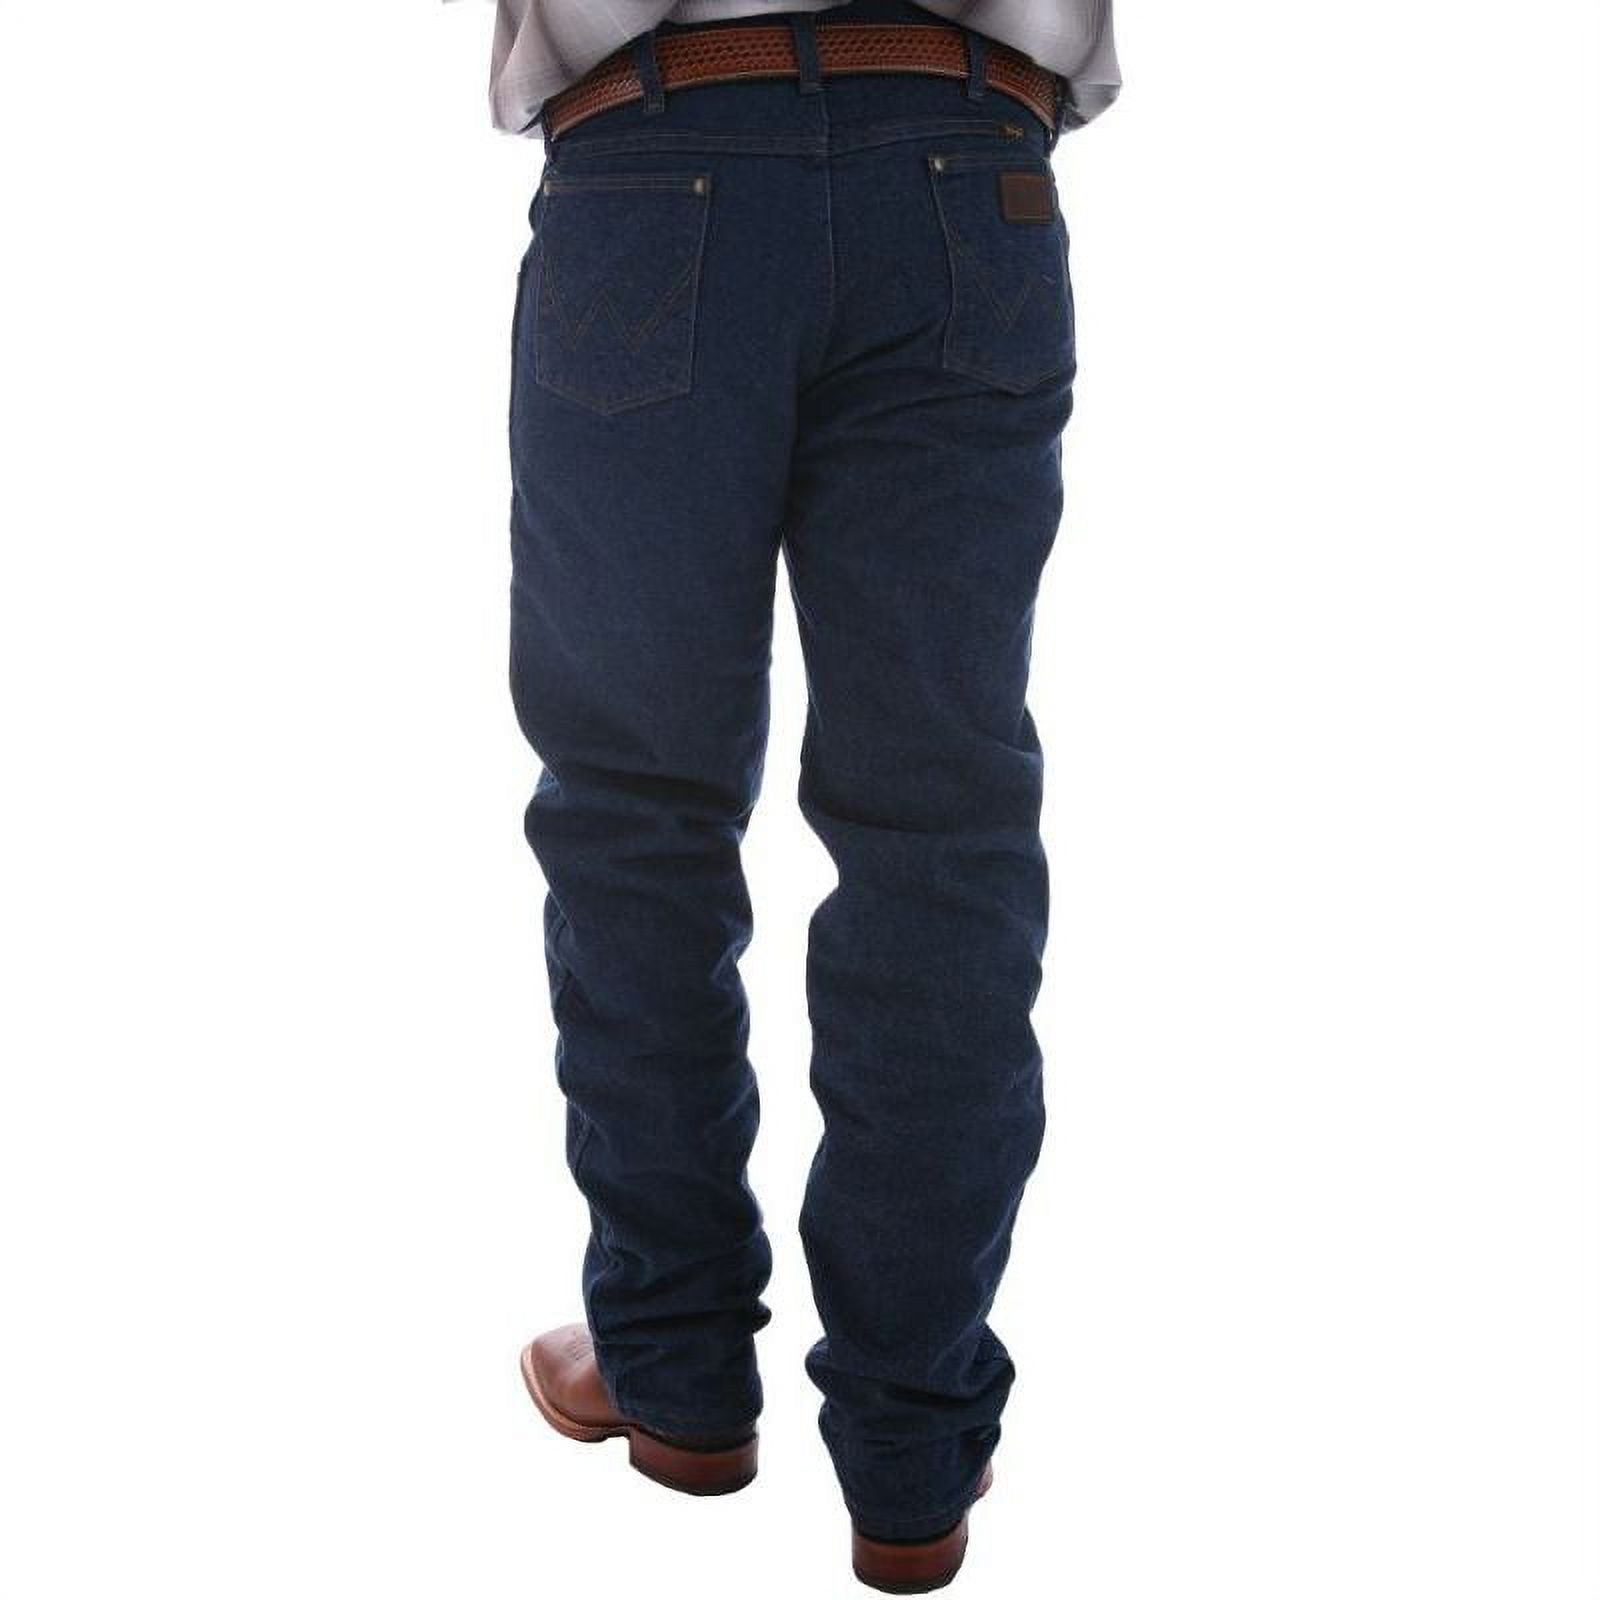 Wrangler Men's 47Mwz Premium Performance Cowboy Cut Regular Fit Prewashed Jeans Indigo 34W x 34L  US - image 1 of 4